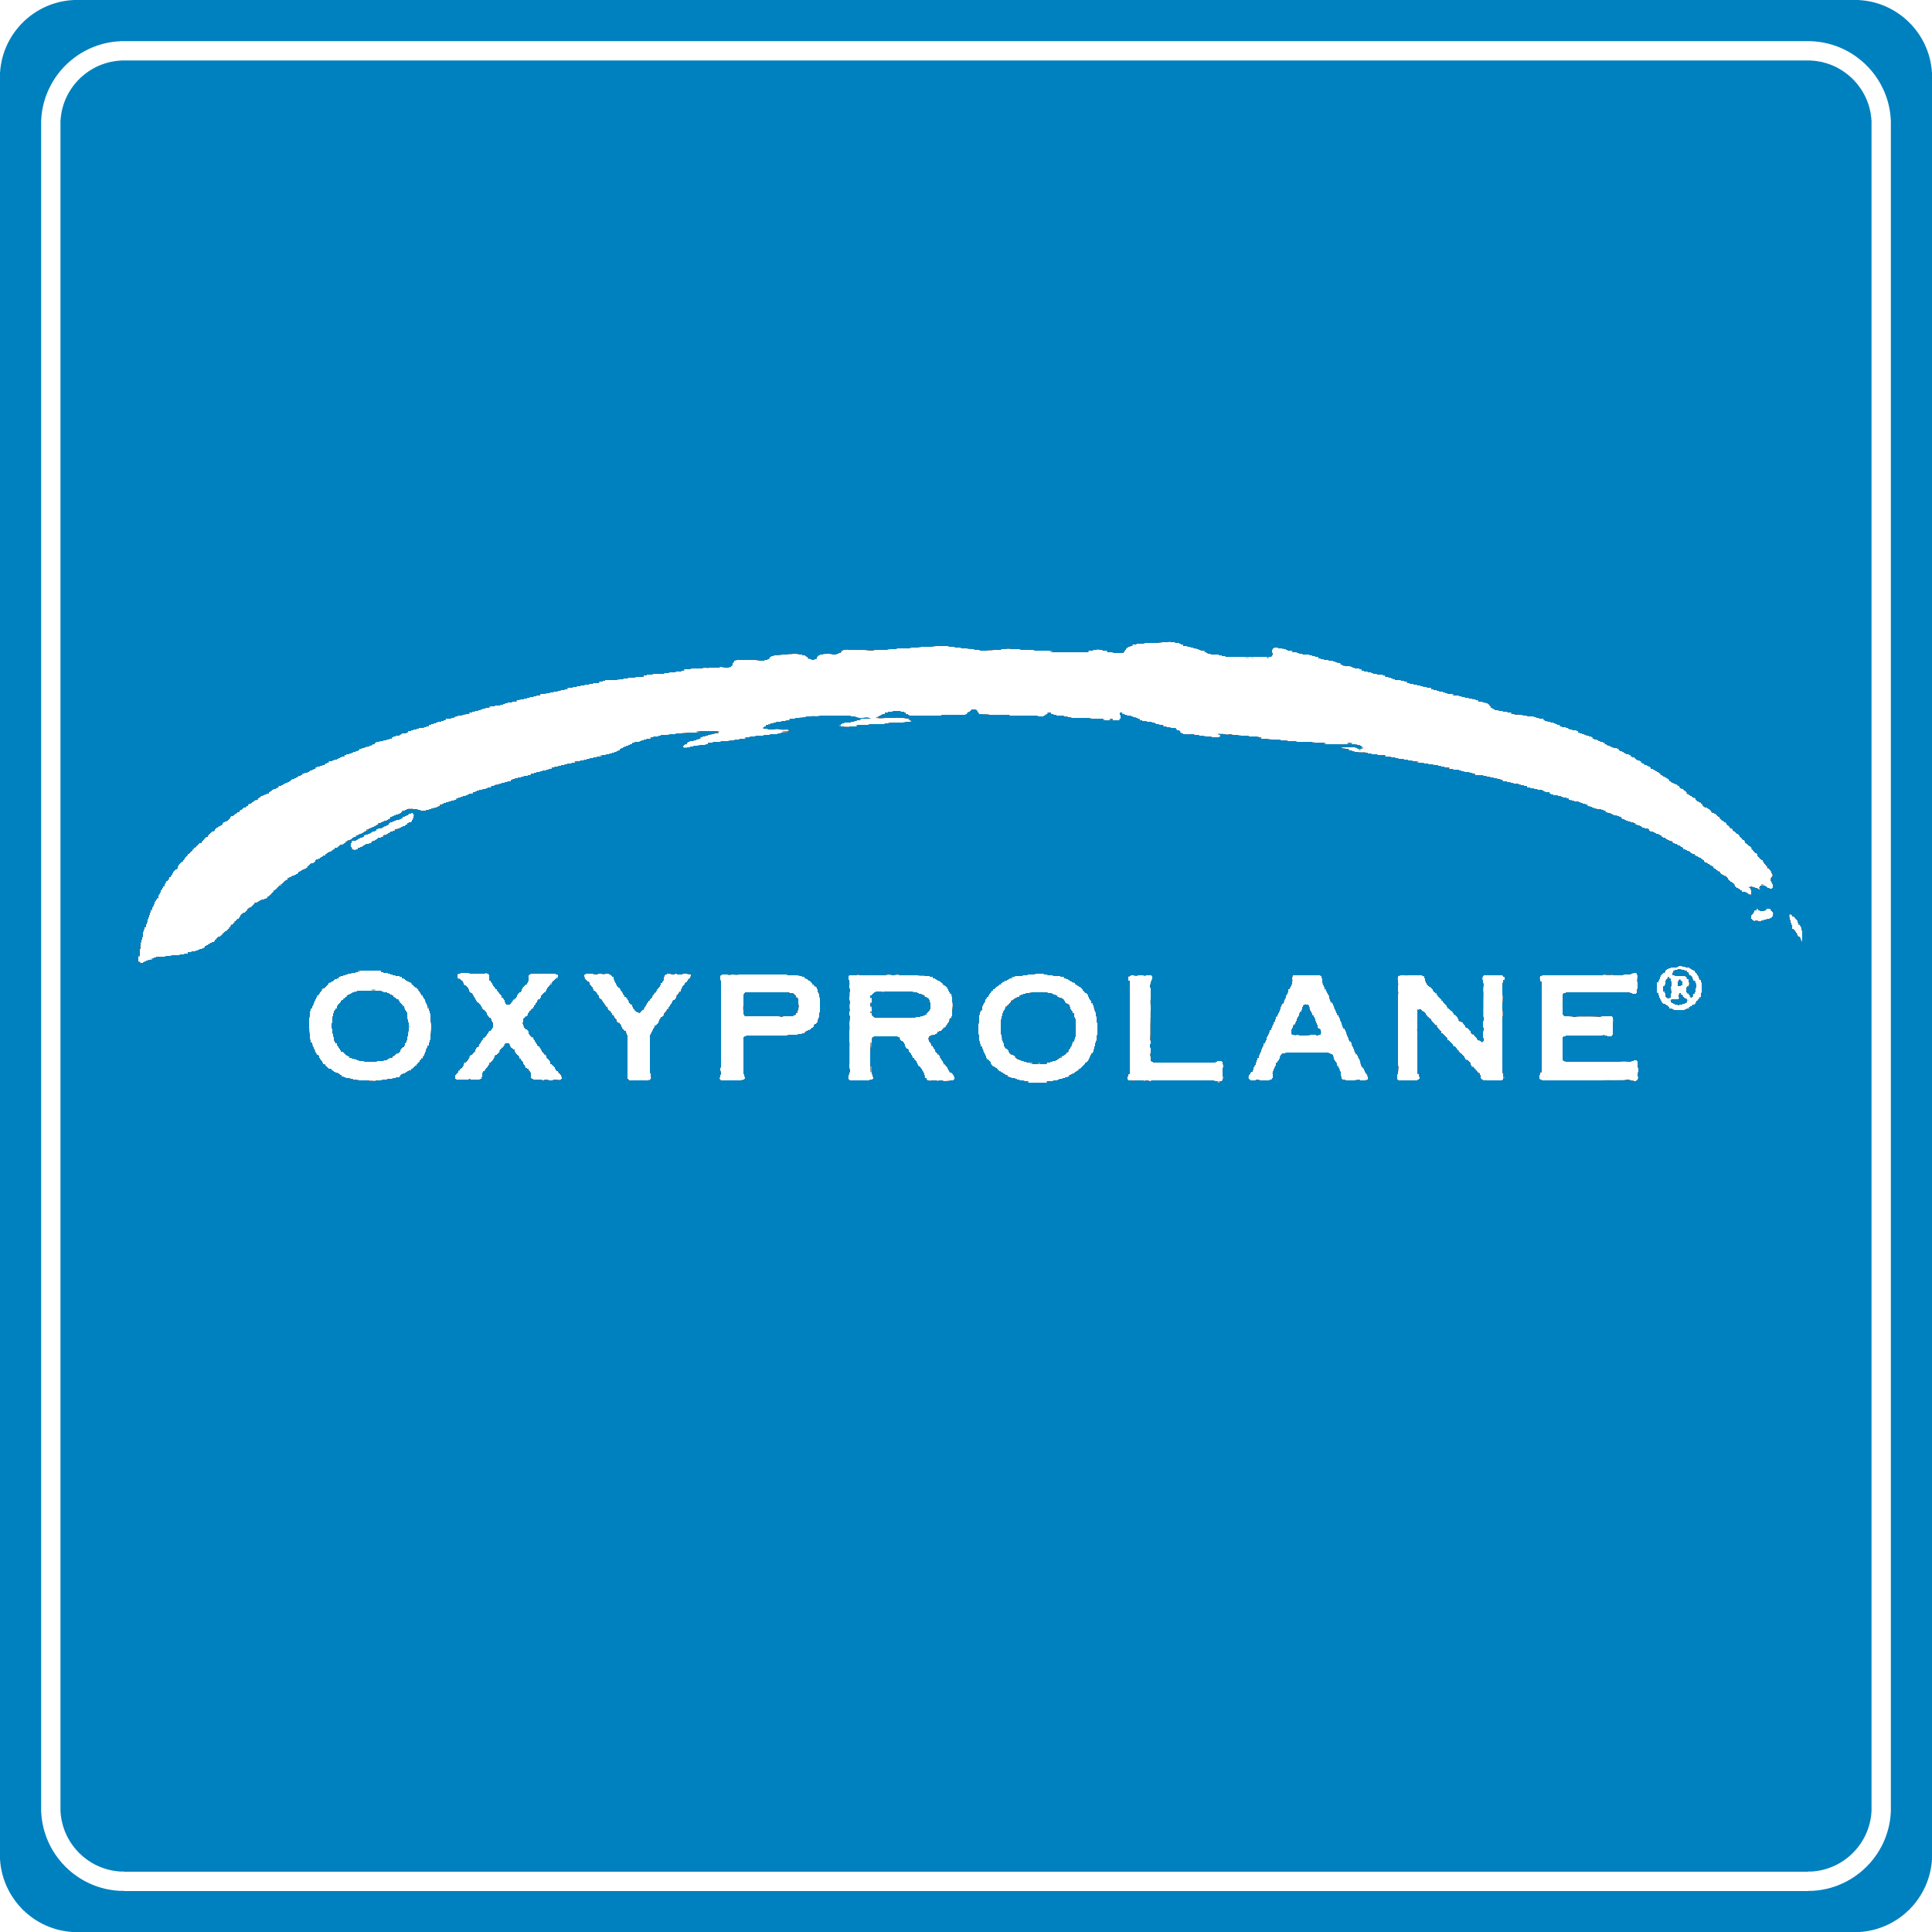 OXYPROLANE